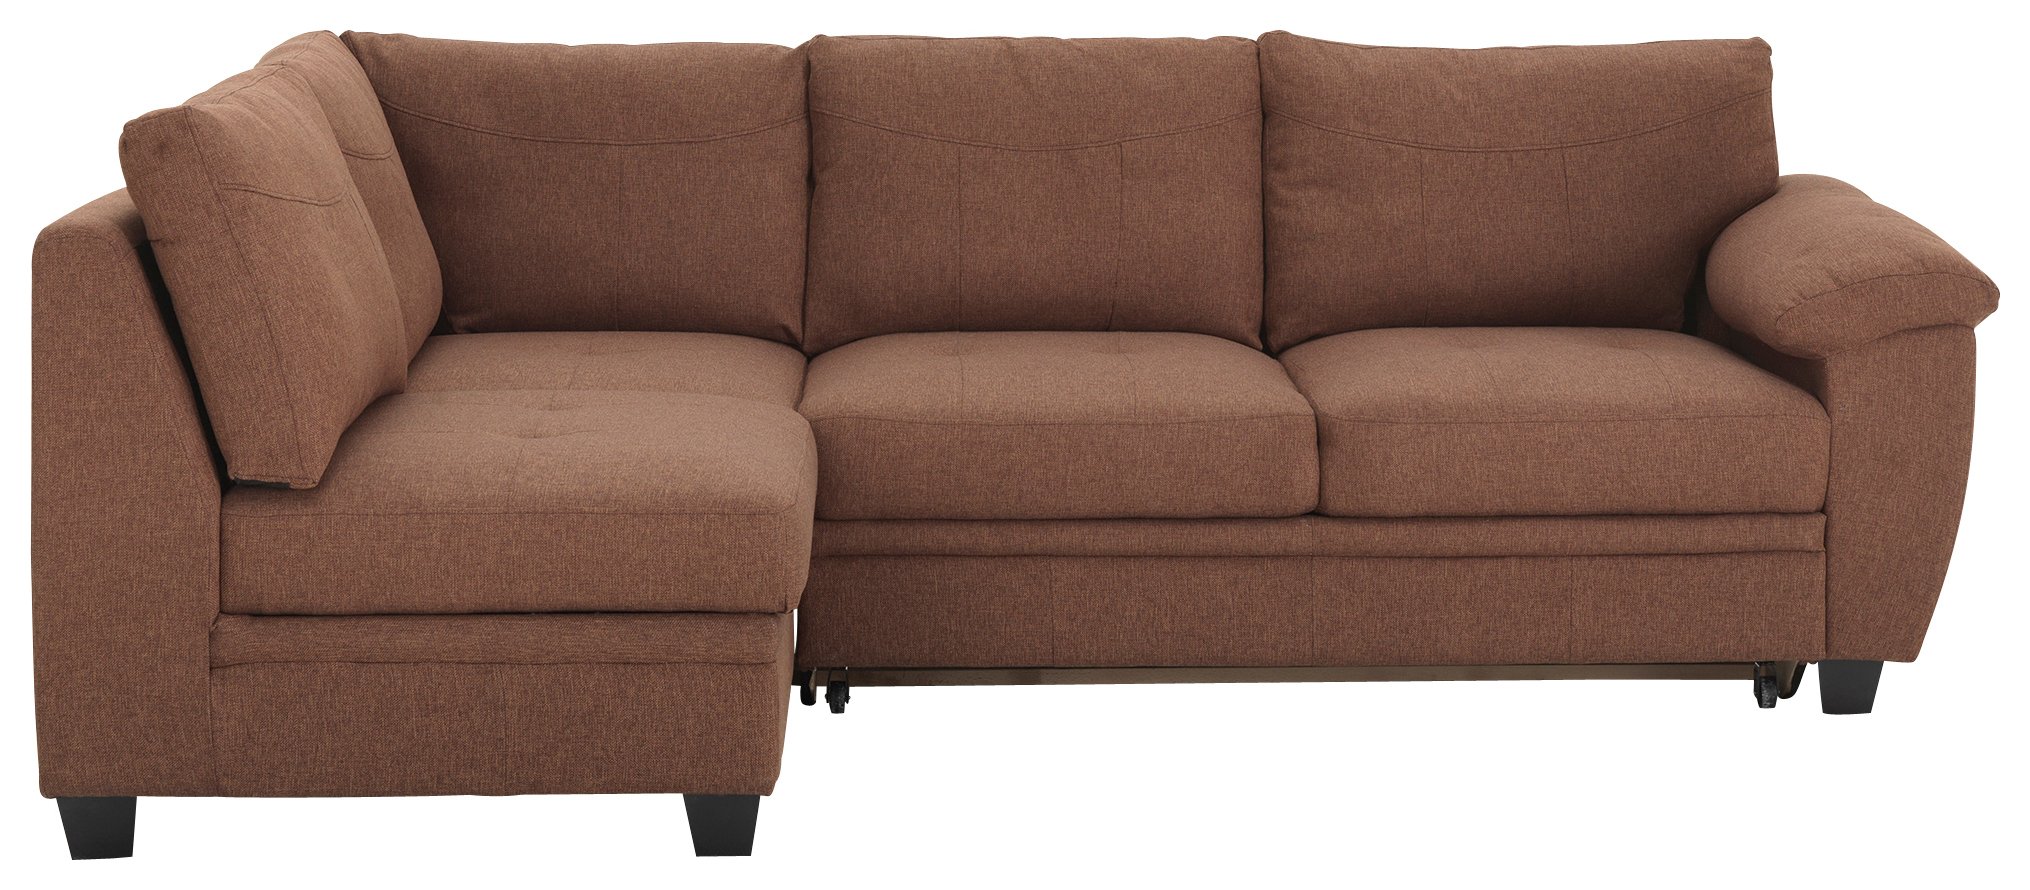 argos brown sofa bed